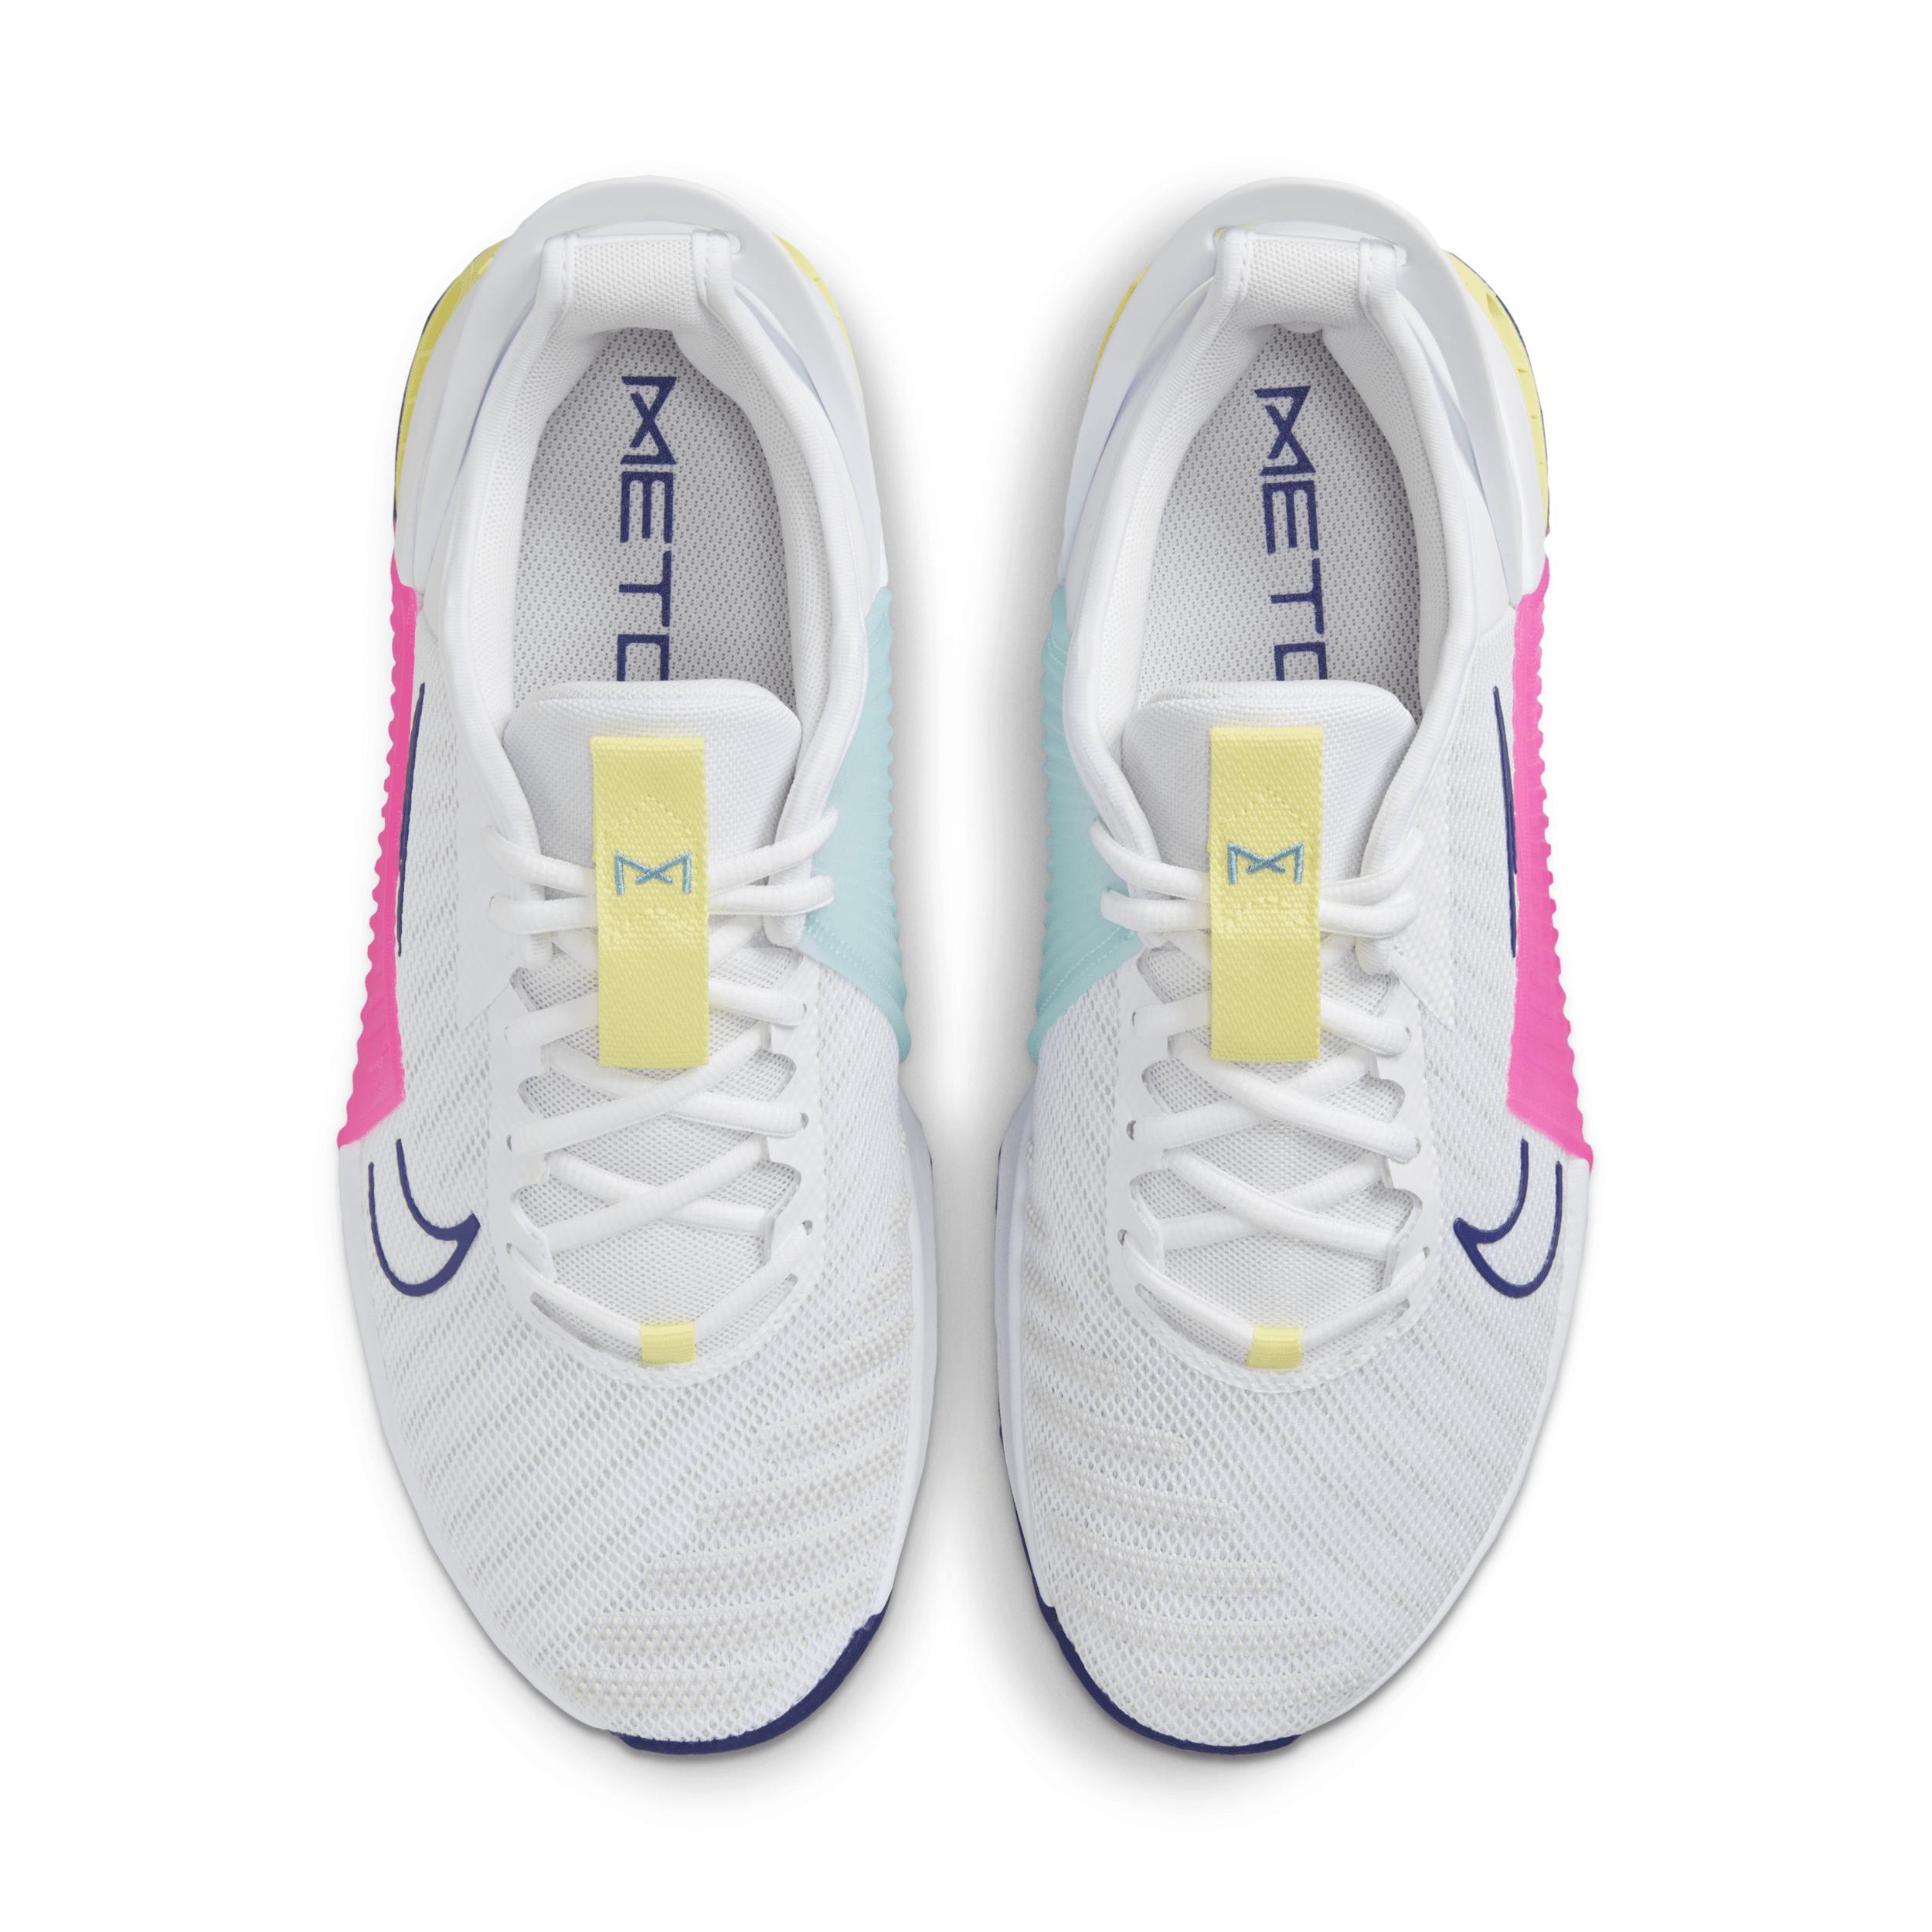 Nike Men's Metcon 9 EasyOn Workout Shoes Product Image